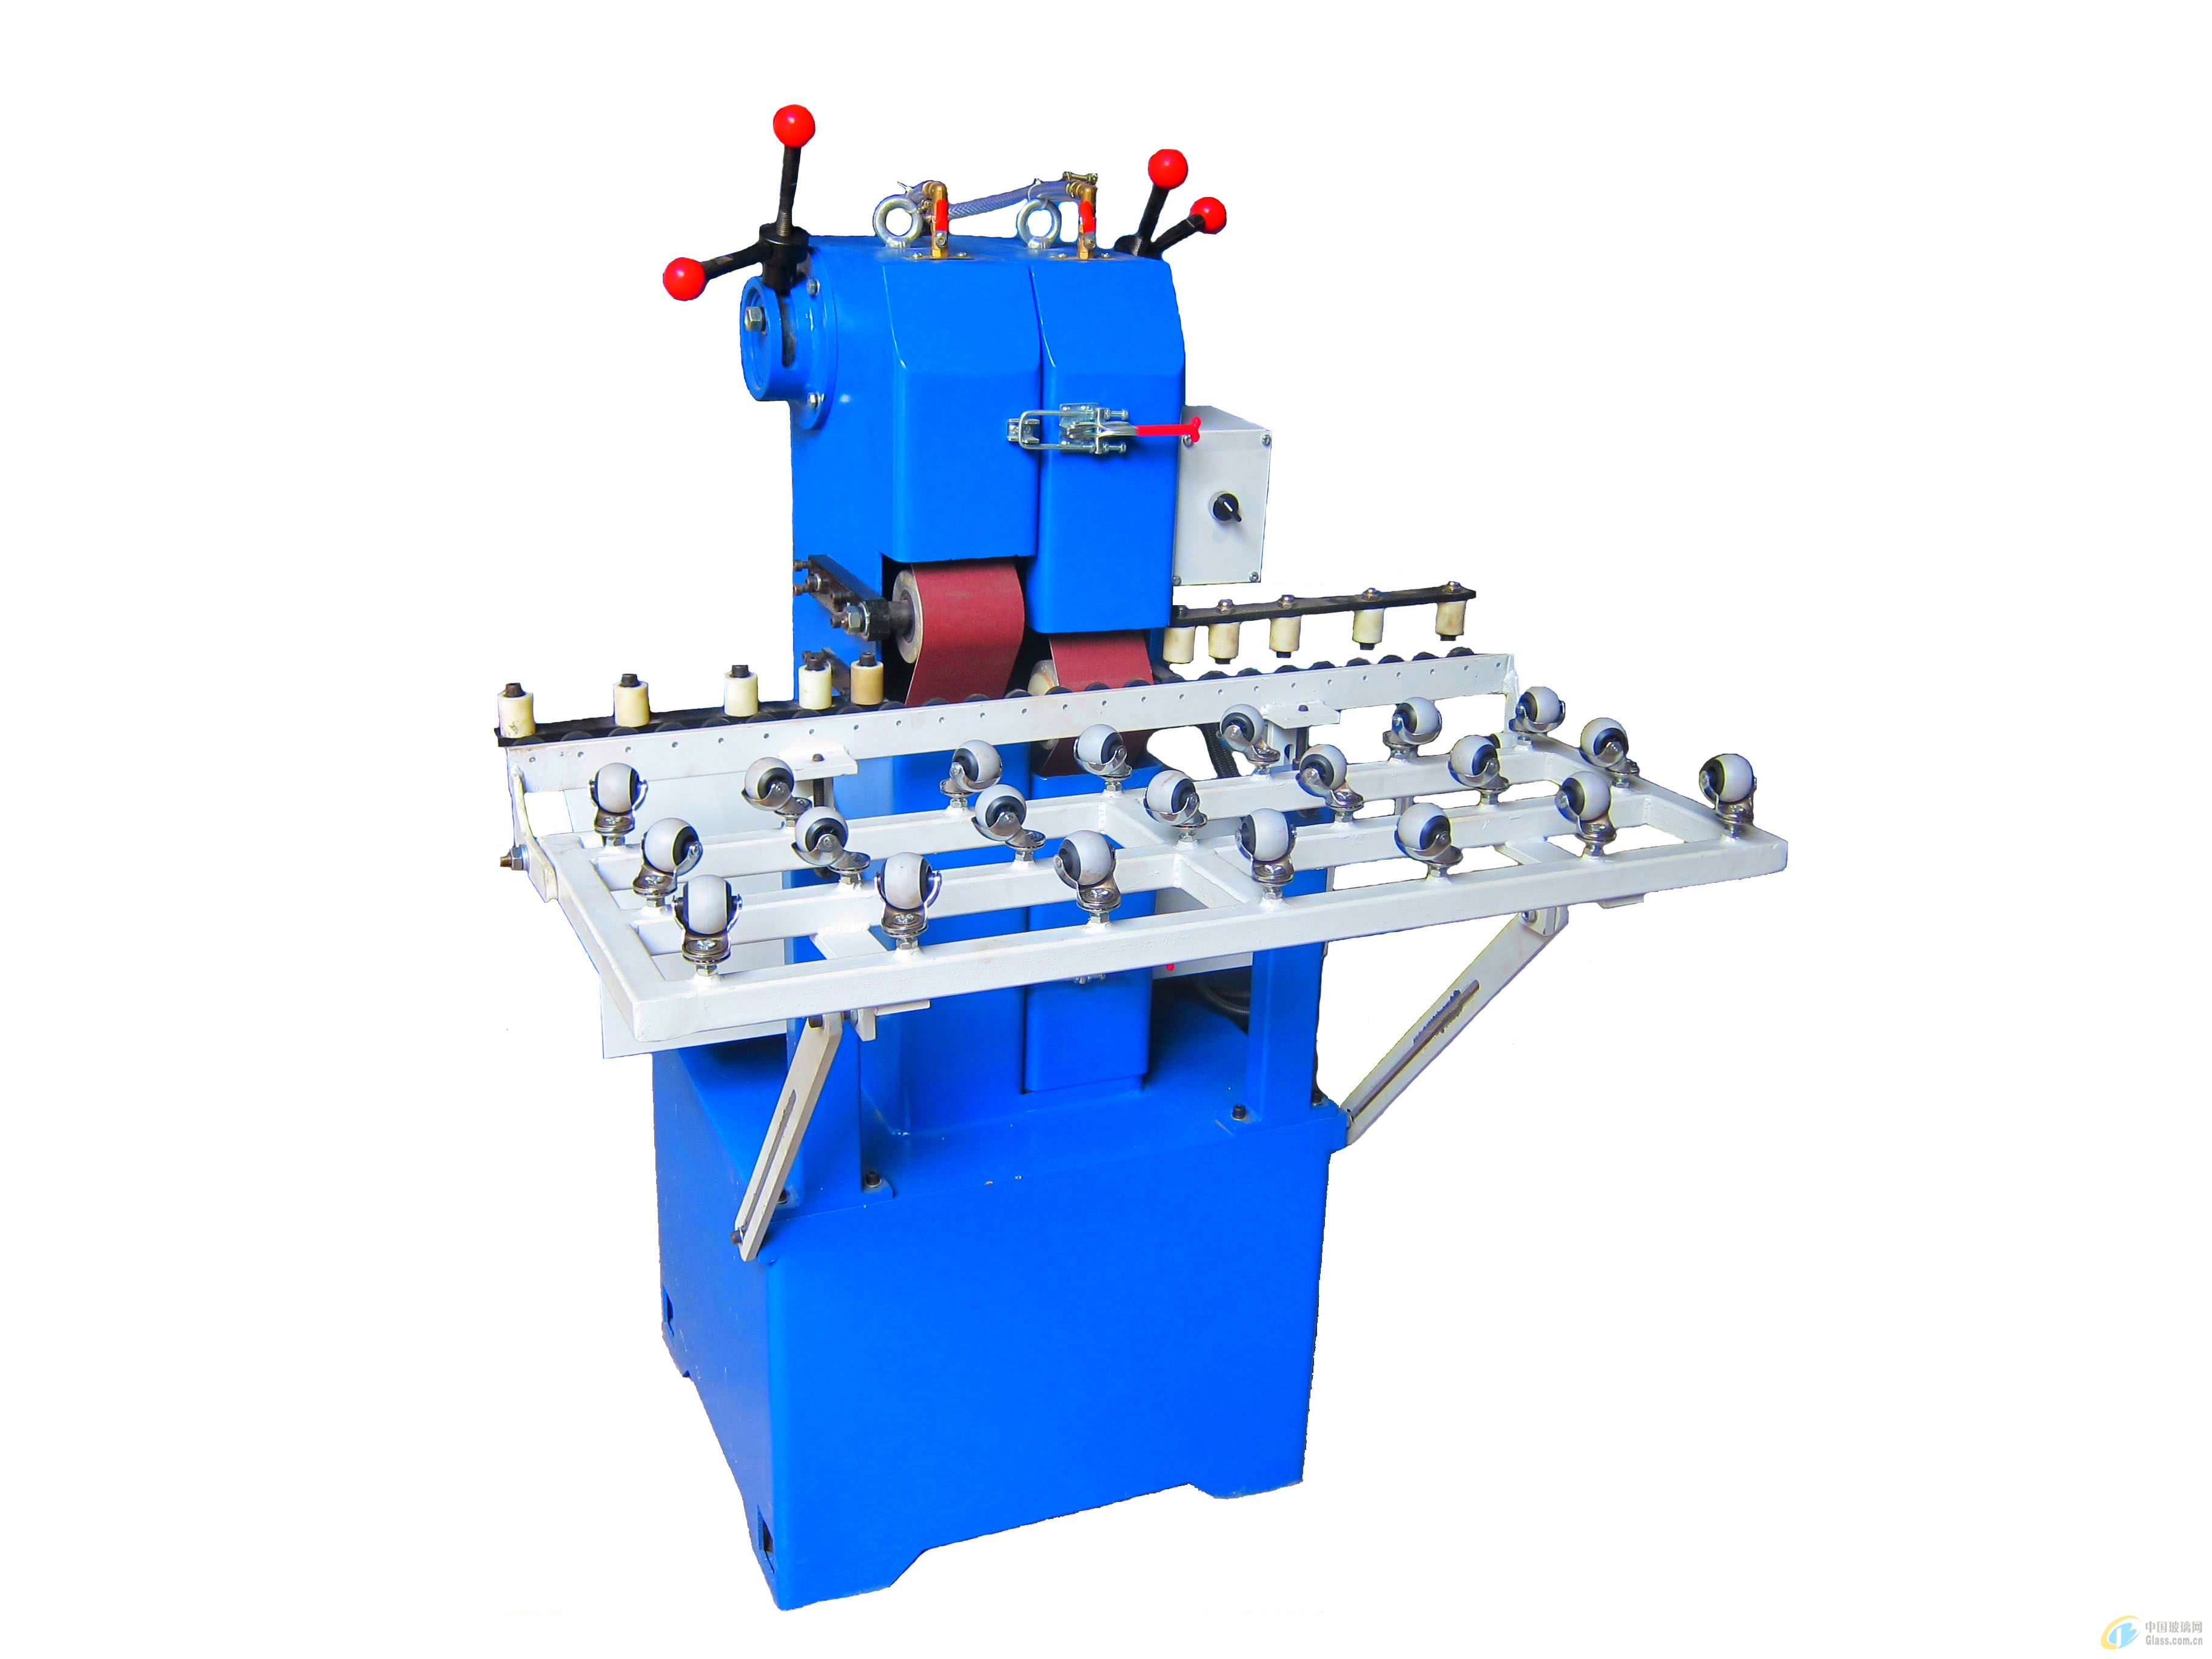 Figure 4 The abrasive belt edge grinding machine